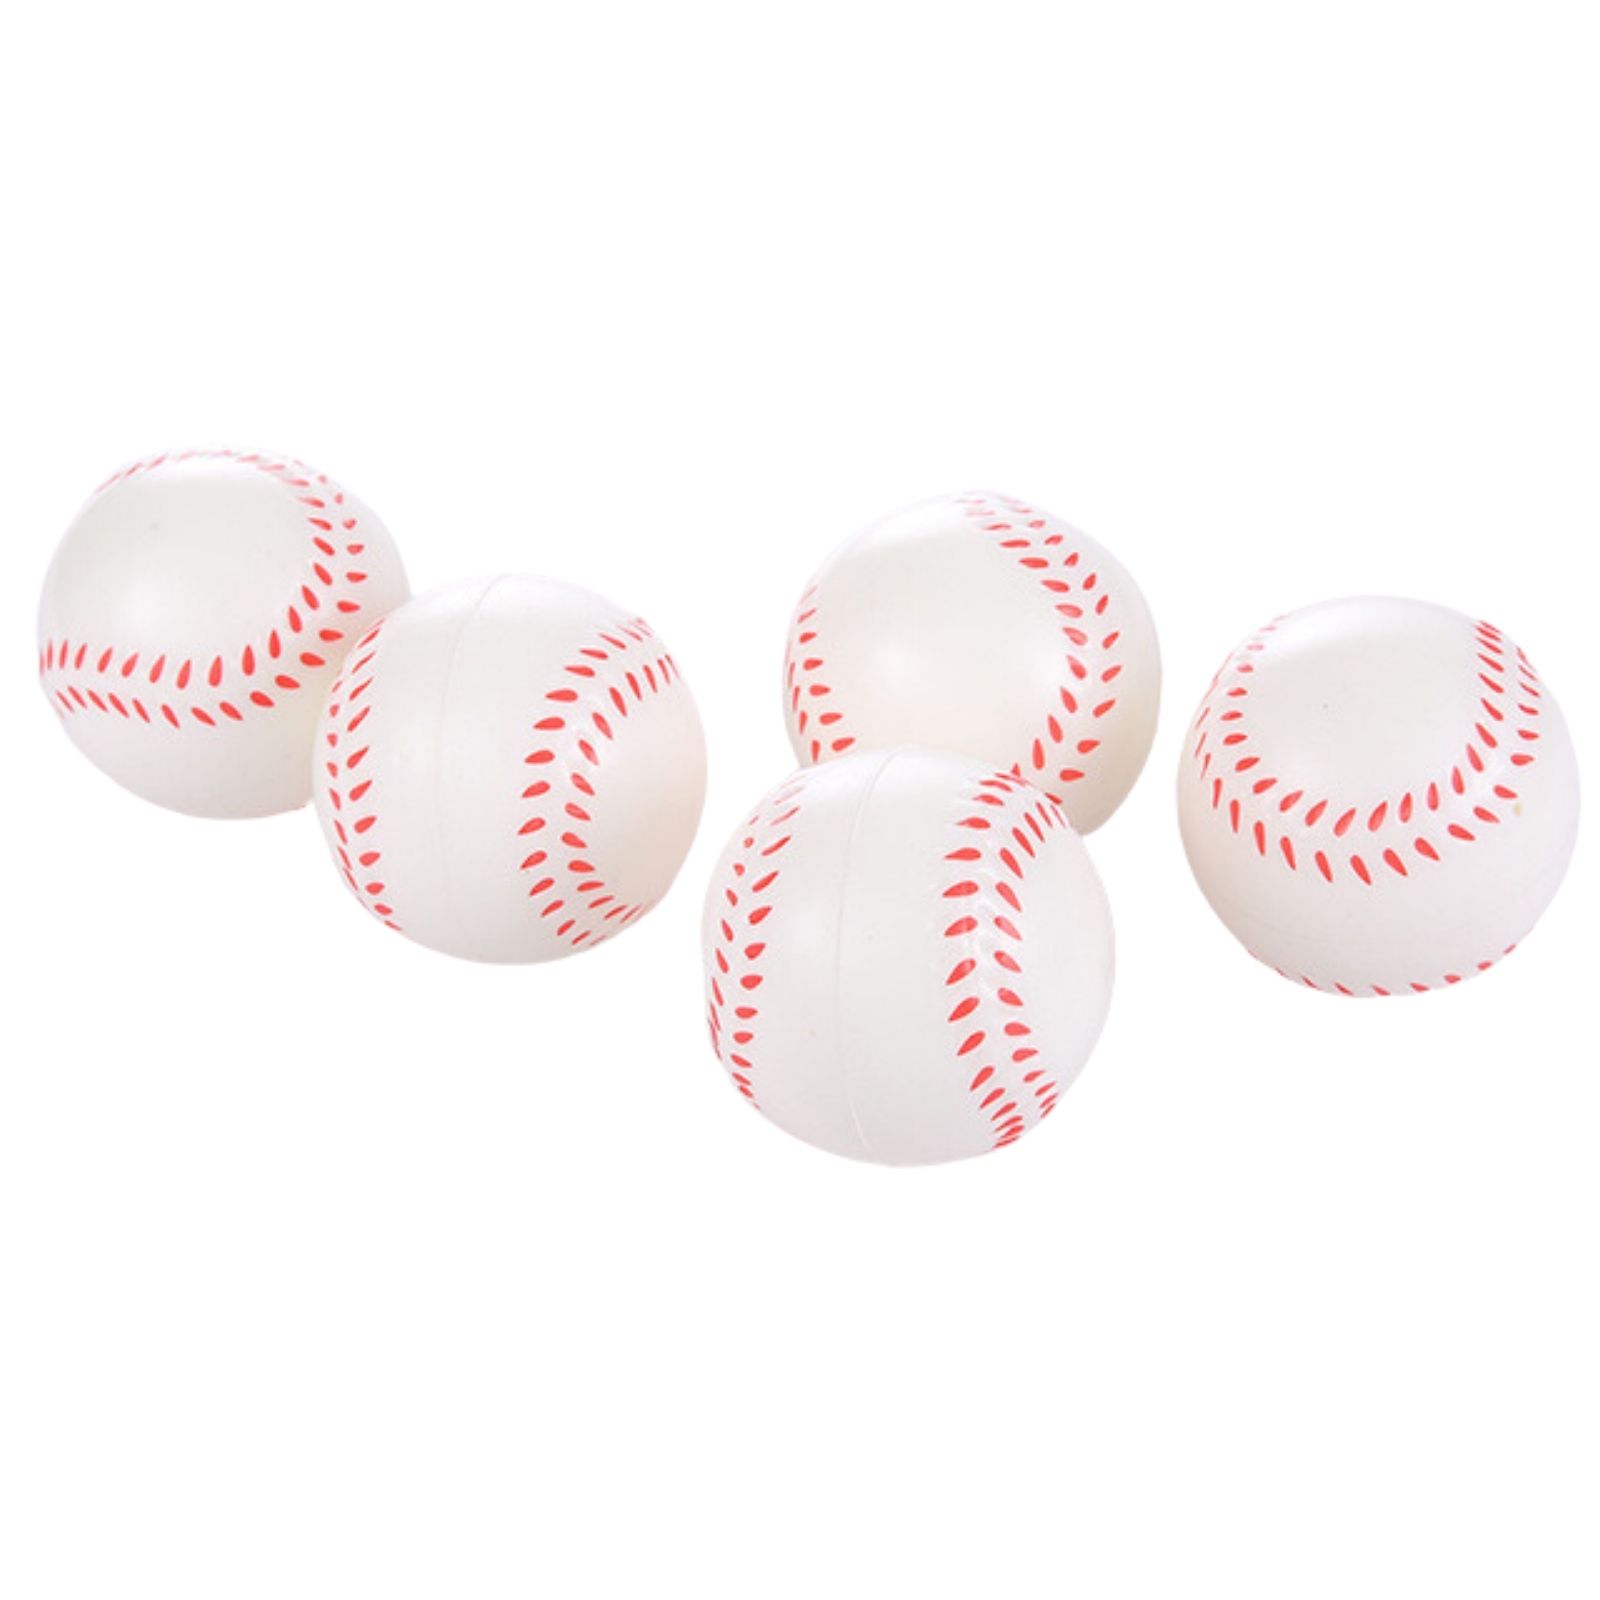 geneX 野球ボール 柔らかい 子供 軟式 練習 キャッチボール 親子 ケガ防止 安心 ソフト 5球セット